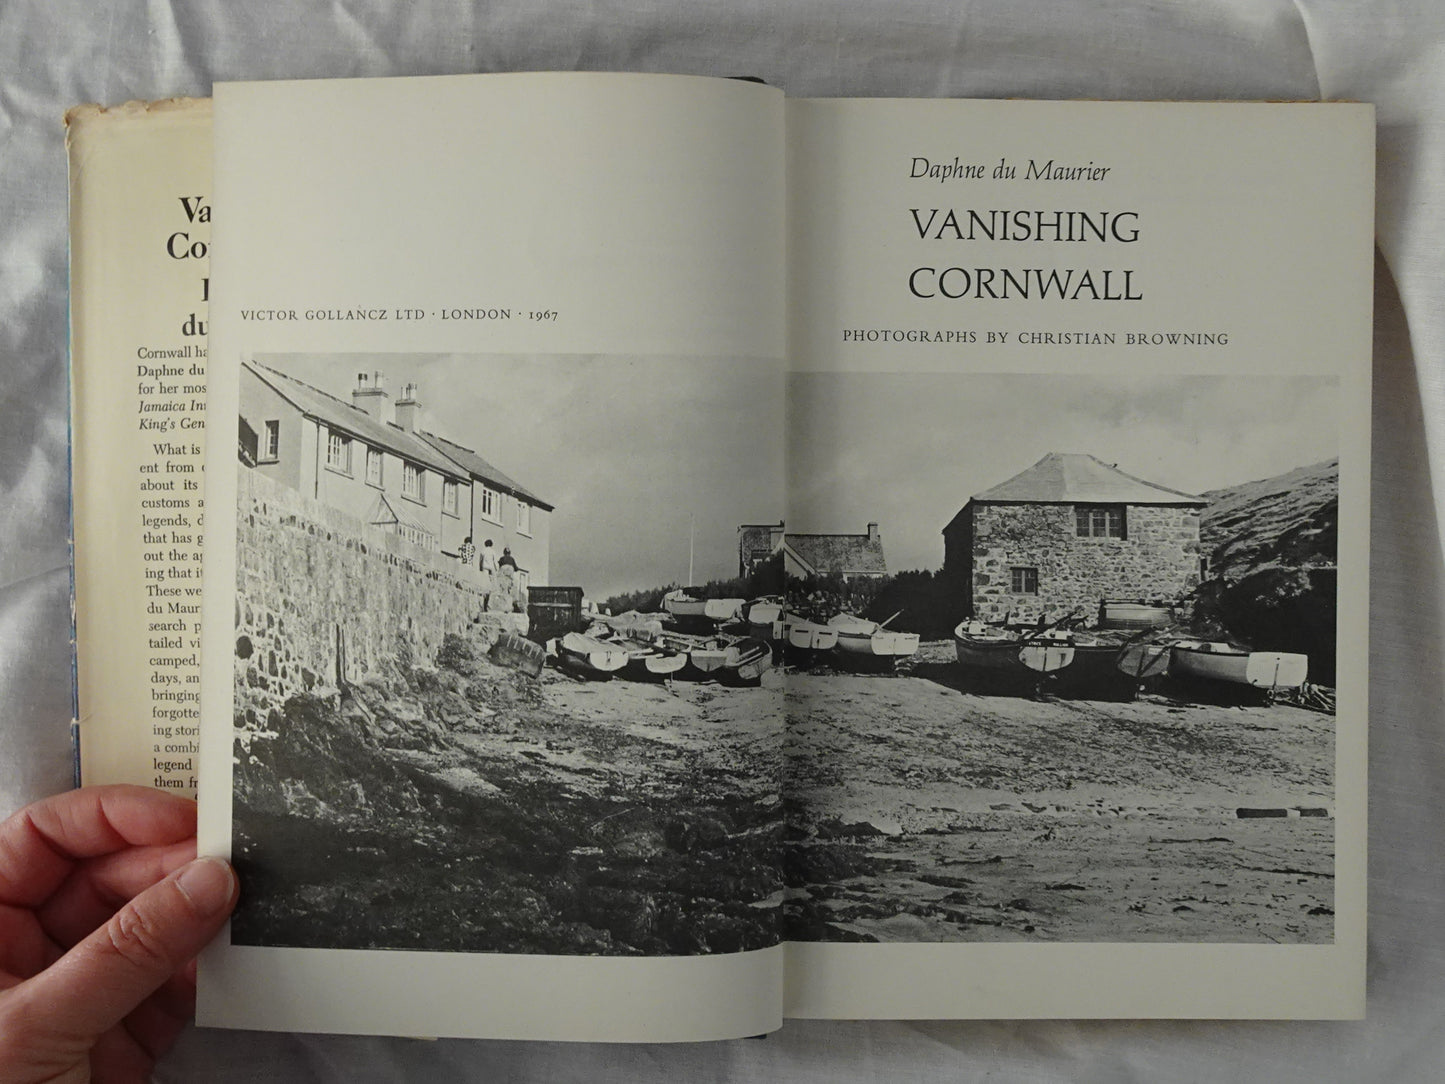 Vanishing Cornwall by Daphne du Maurier